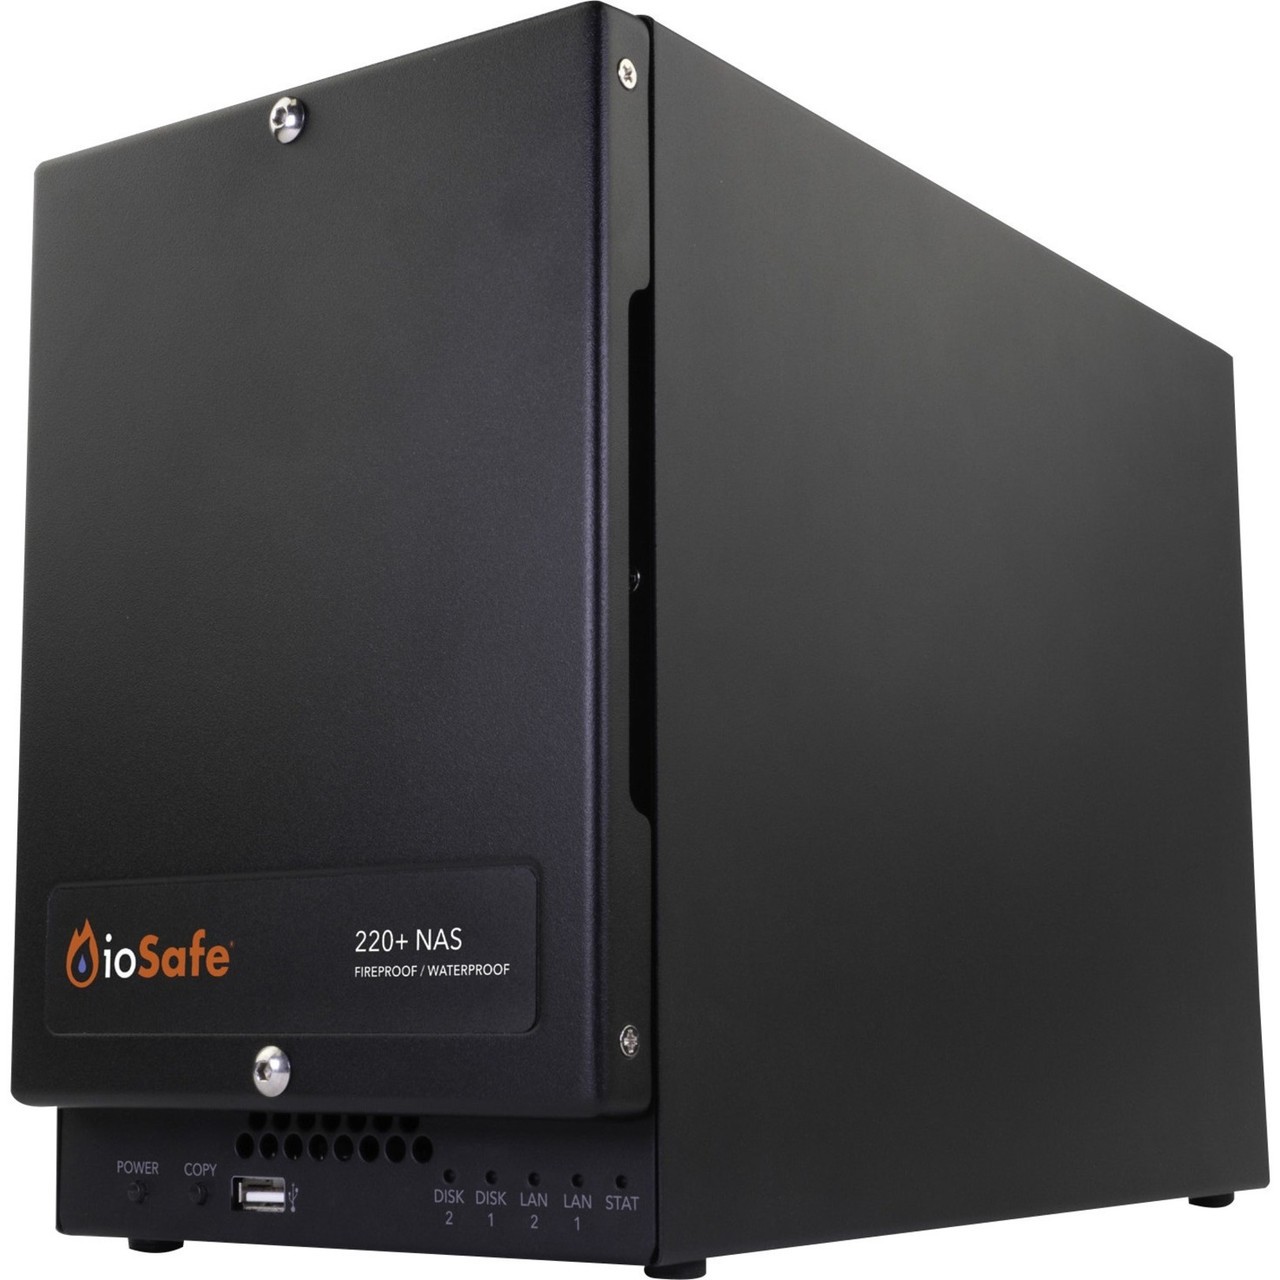 ioSafe 220+ SAN/NAS Storage System - 72200-3836-1230